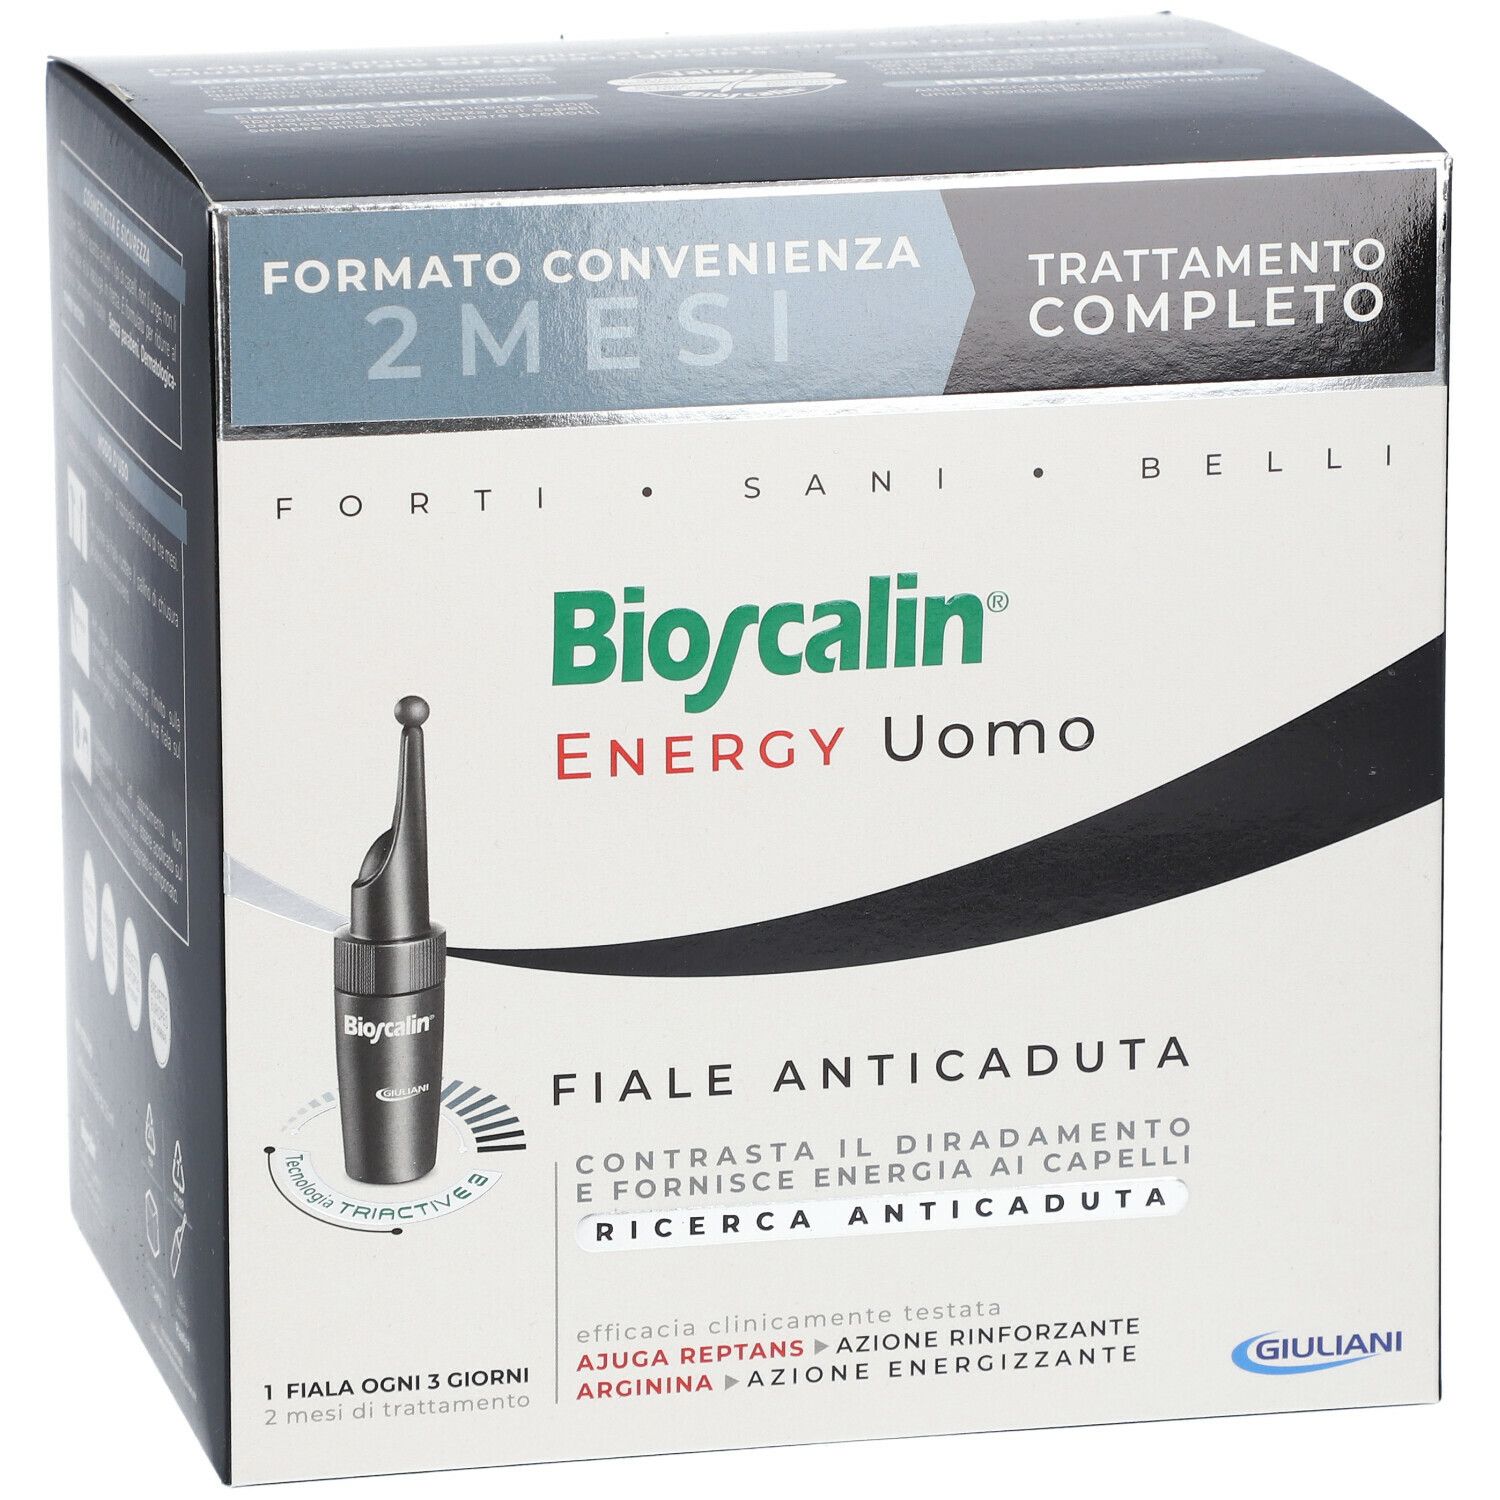 Bioscalin® Energy Fiale Anticaduta Uomo